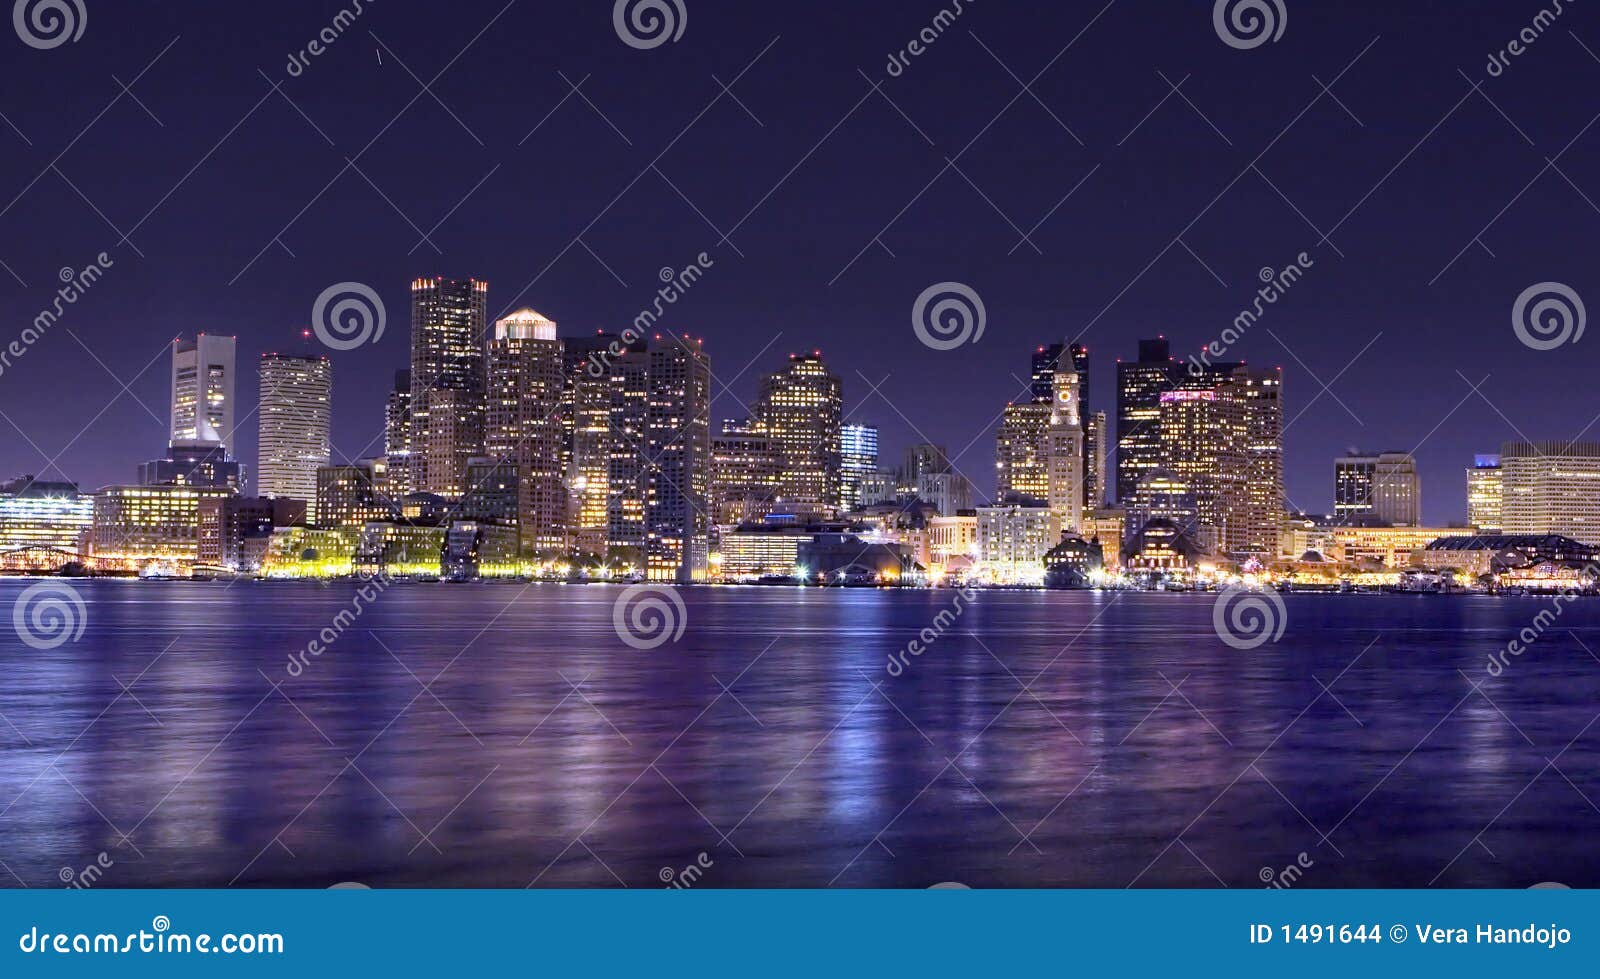 boston night panorama